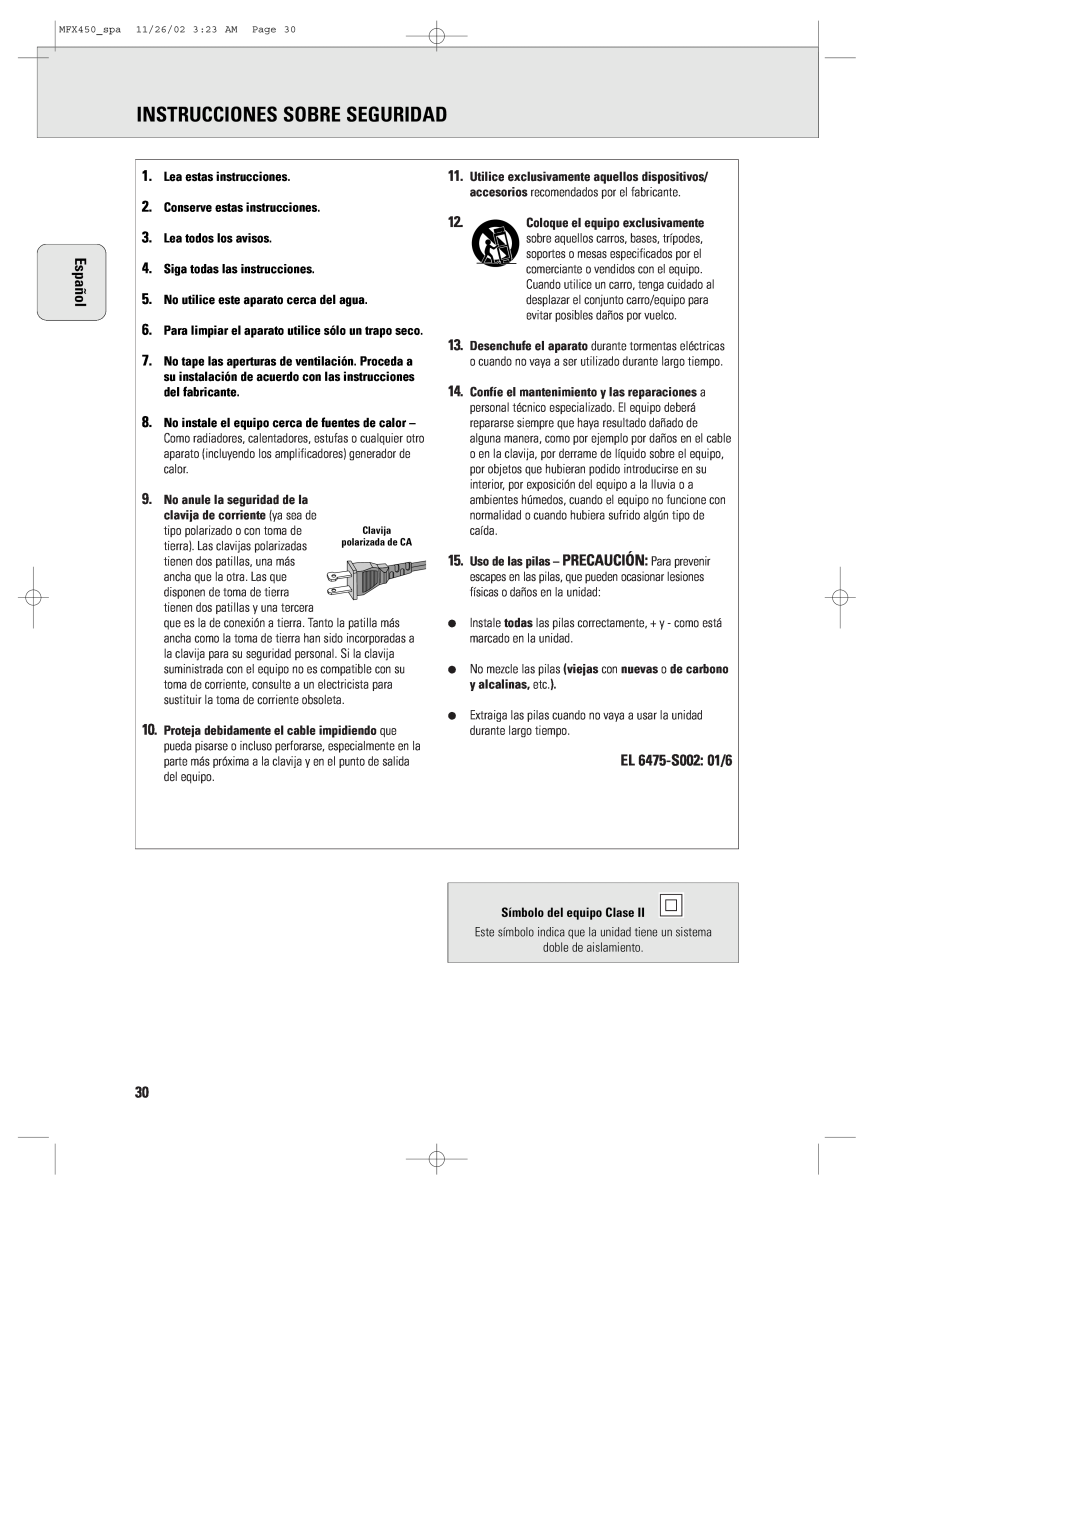 Magnavox MCS 990/17, MSW 990/17, MMX450/17 manual Instrucciones Sobre Seguridad, Español, EL 6475-S002 01/6 